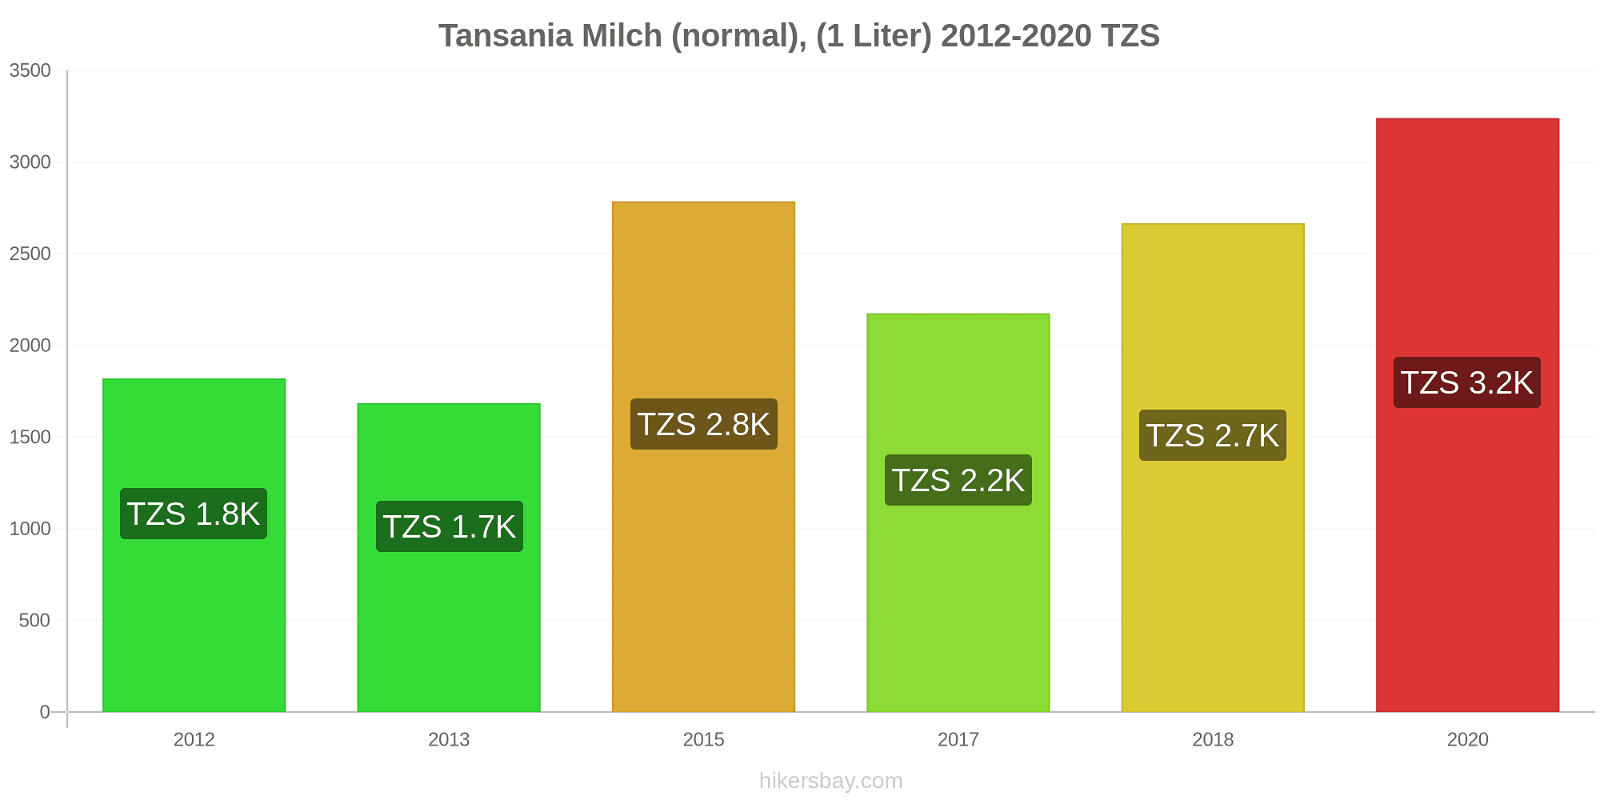 Tansania Preisänderungen (Regulär), Milch (1 Liter) hikersbay.com